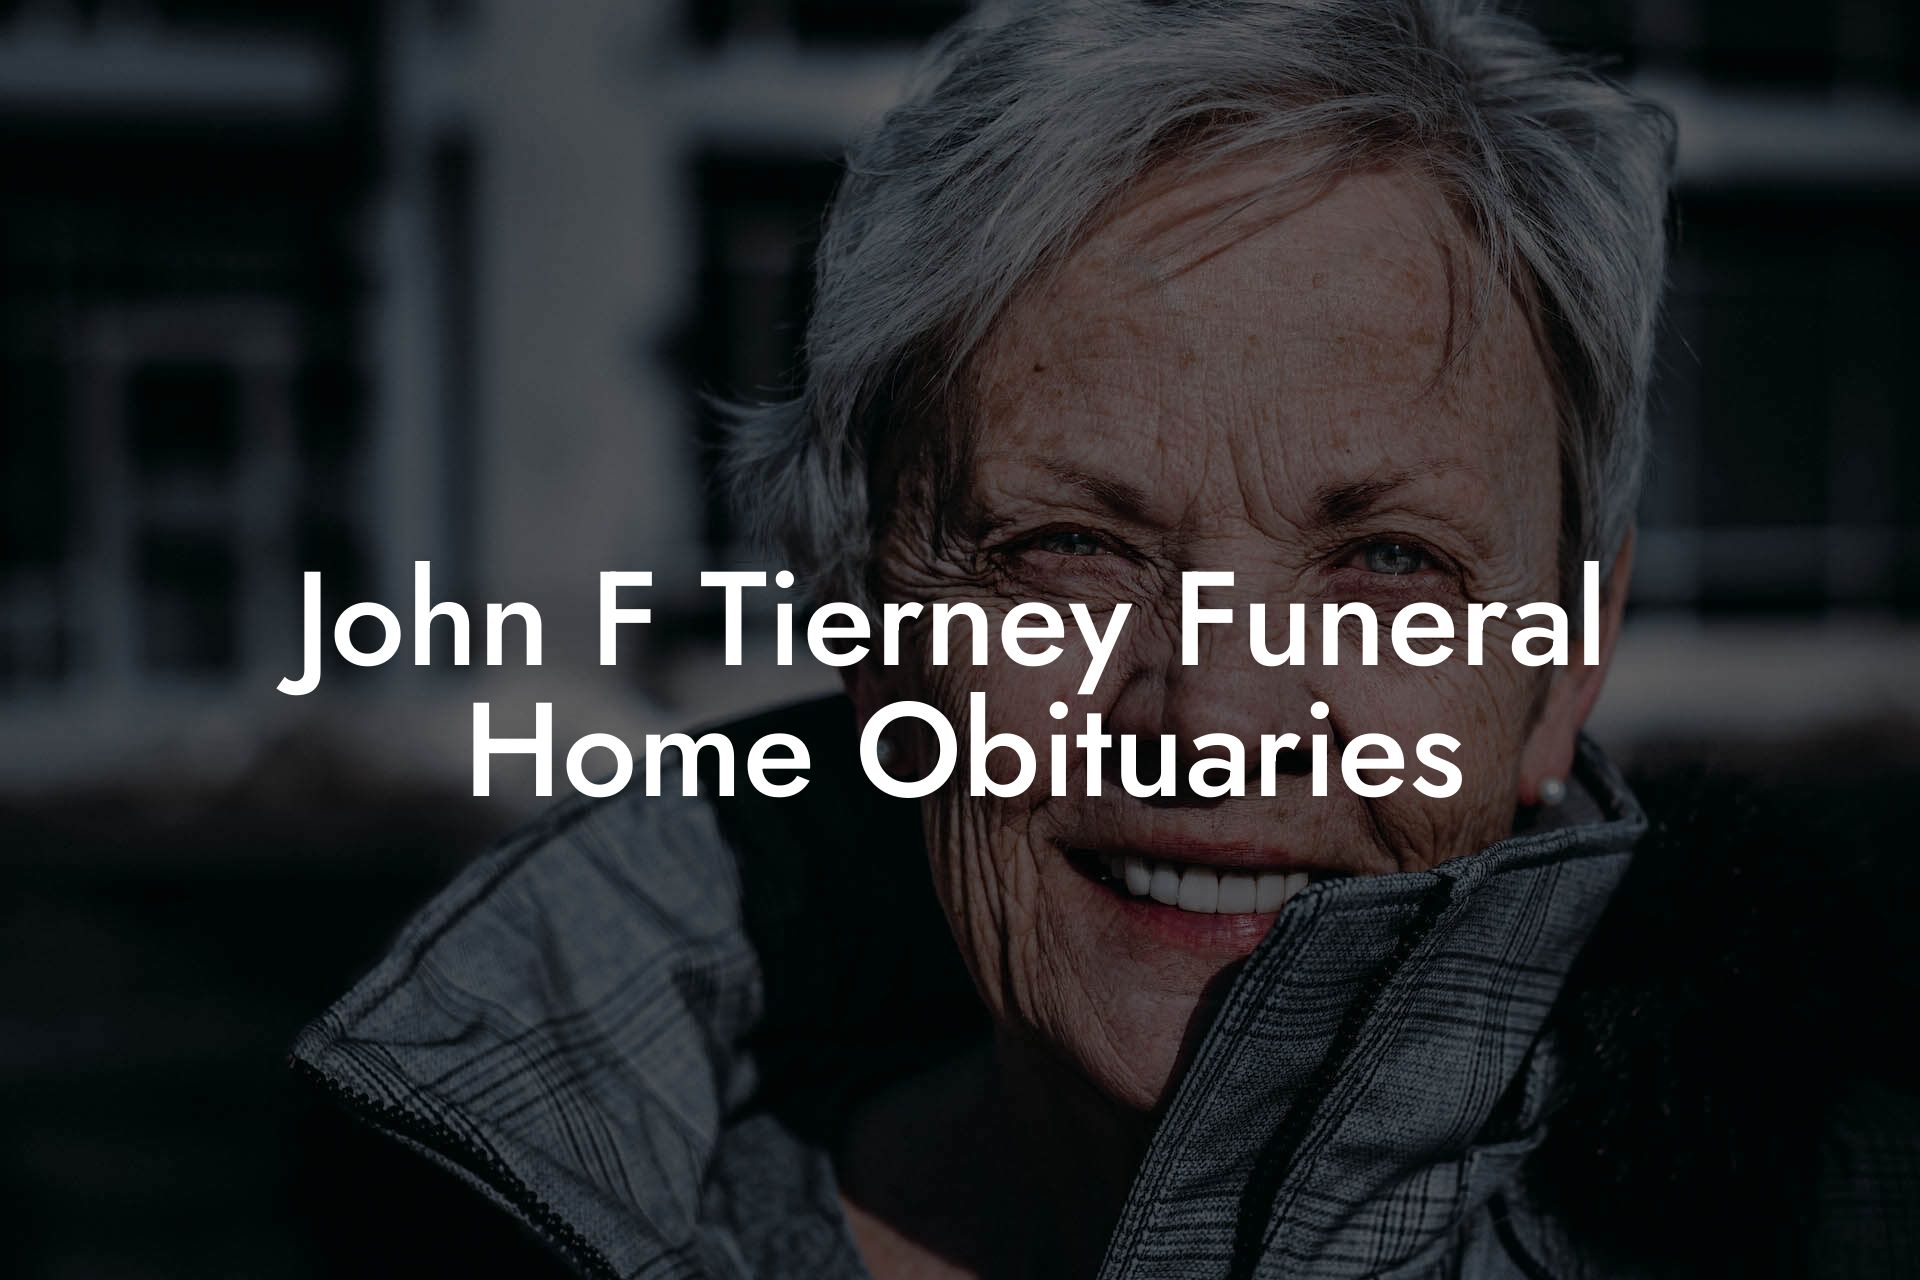 John F. Tierney Funeral Home Obituaries